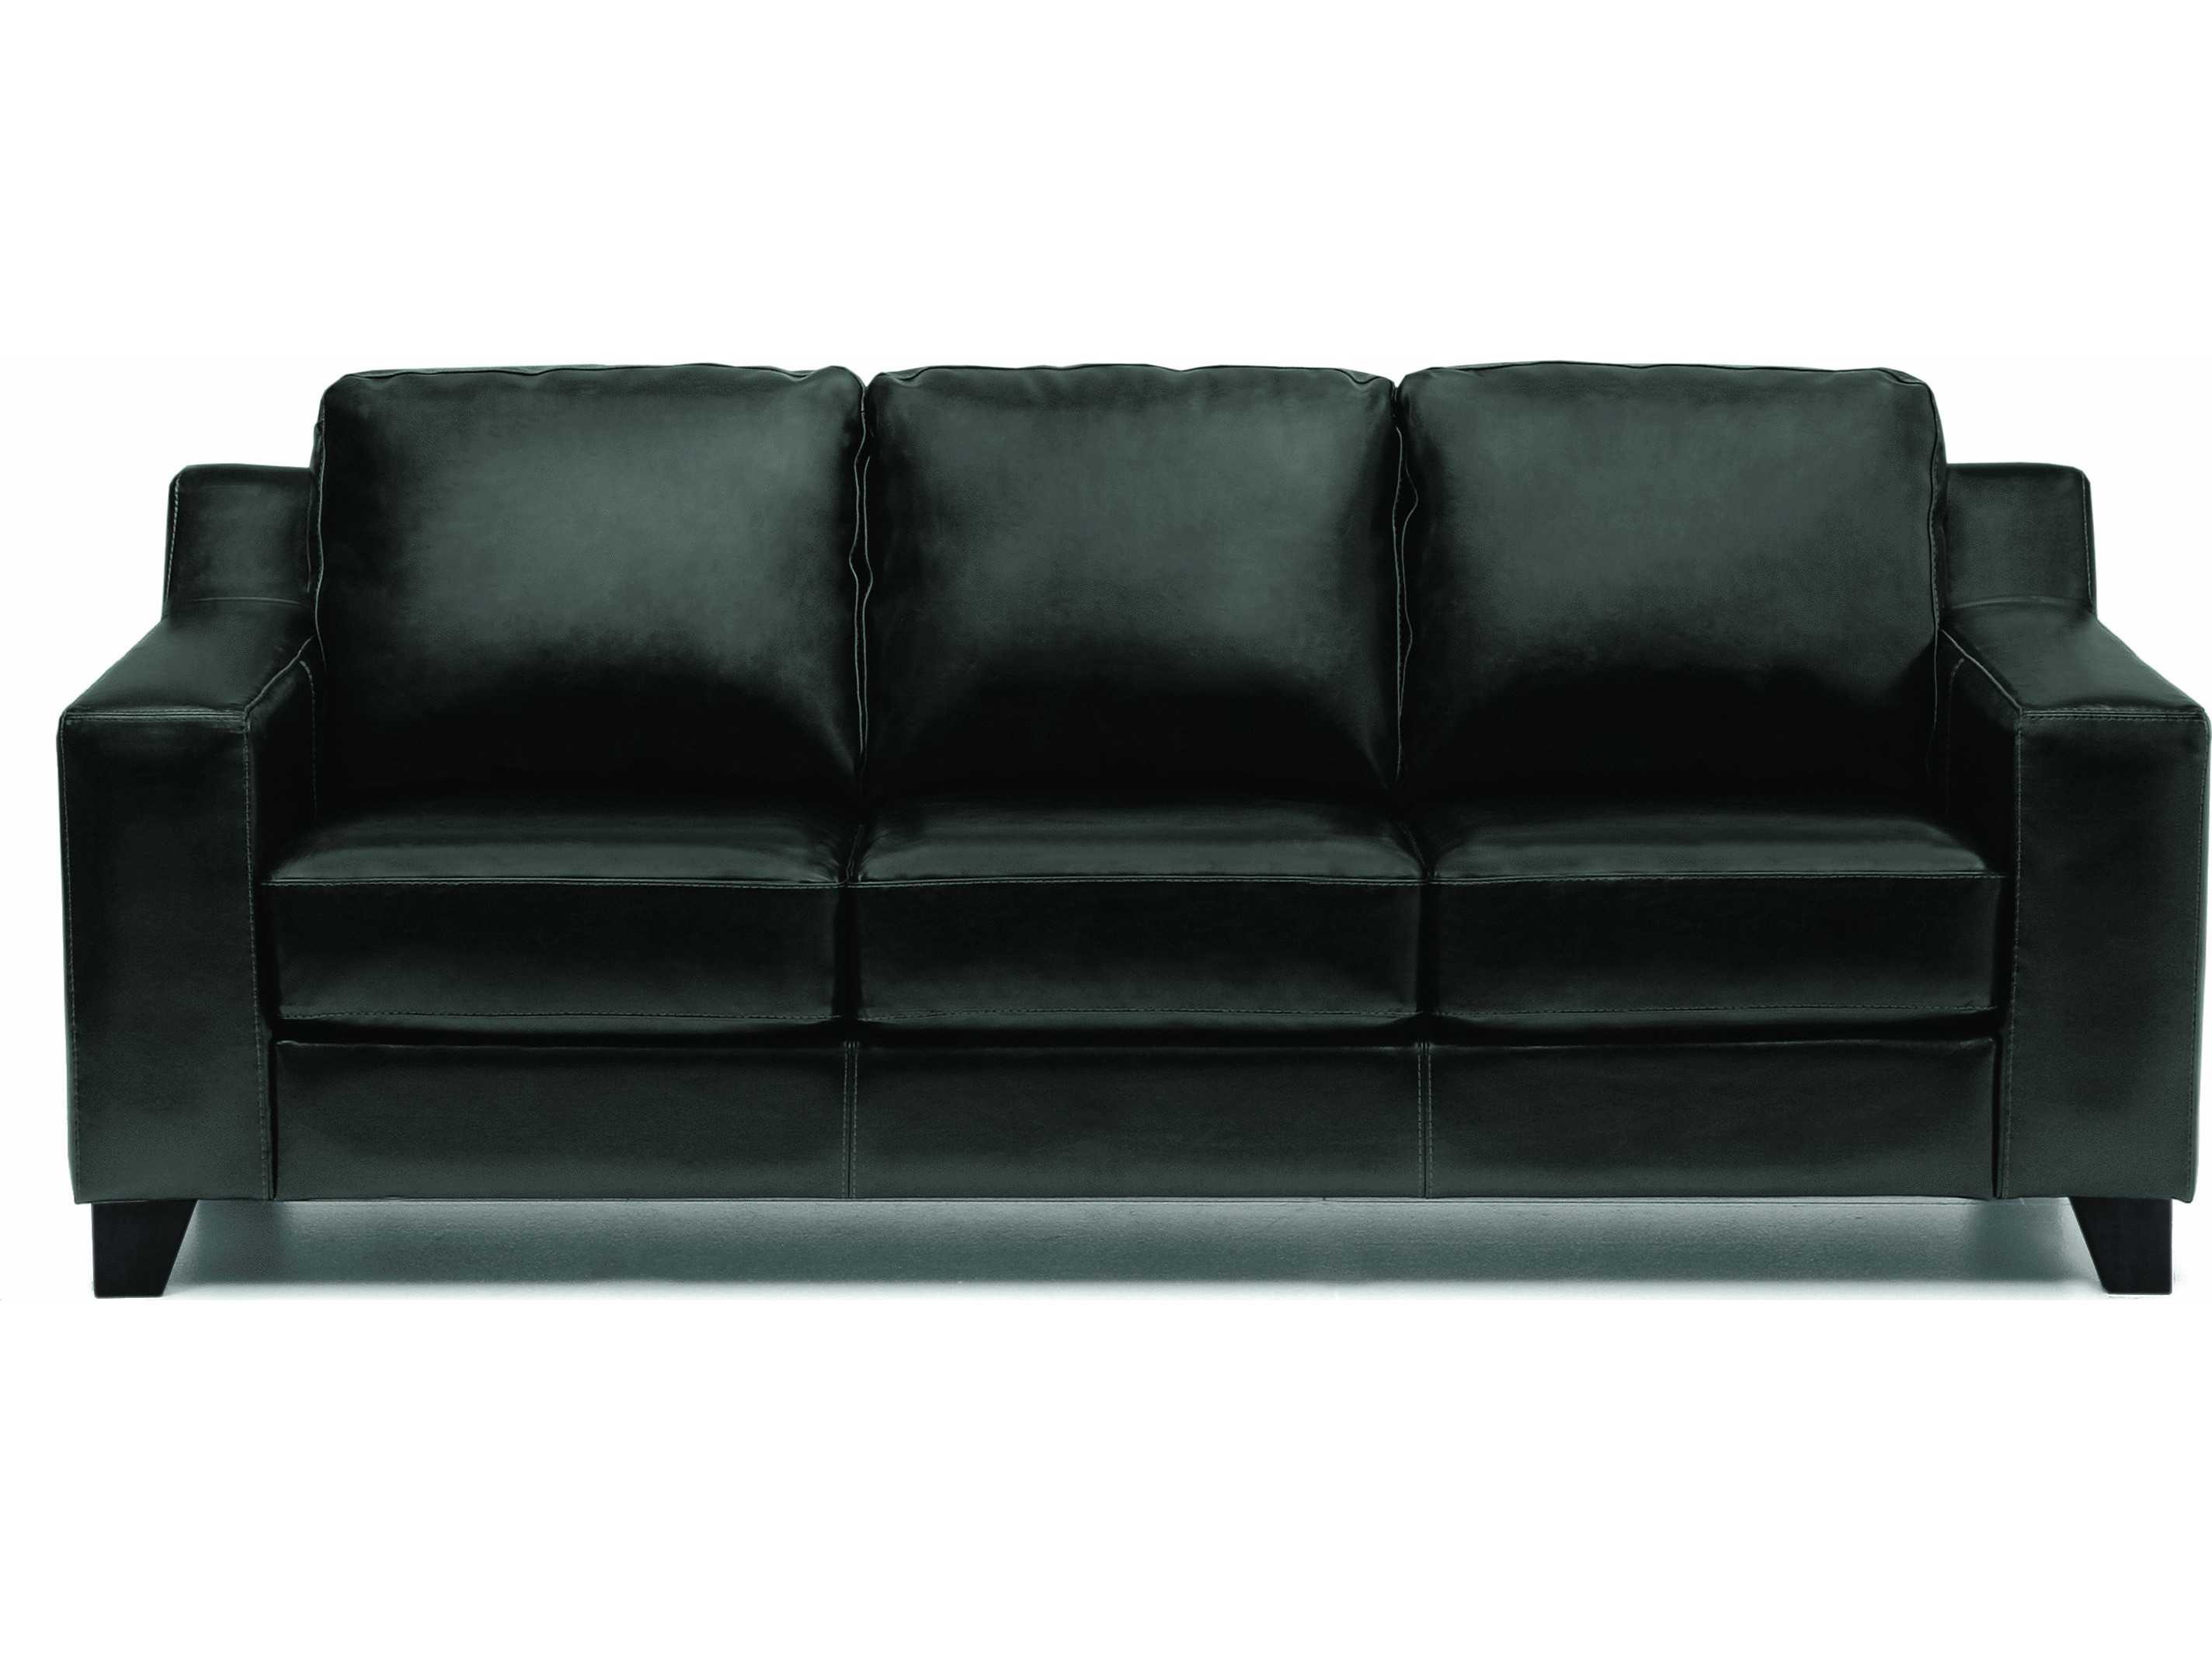 Palliser Reed Sofa Pl7728901, Palliser Leather Couch